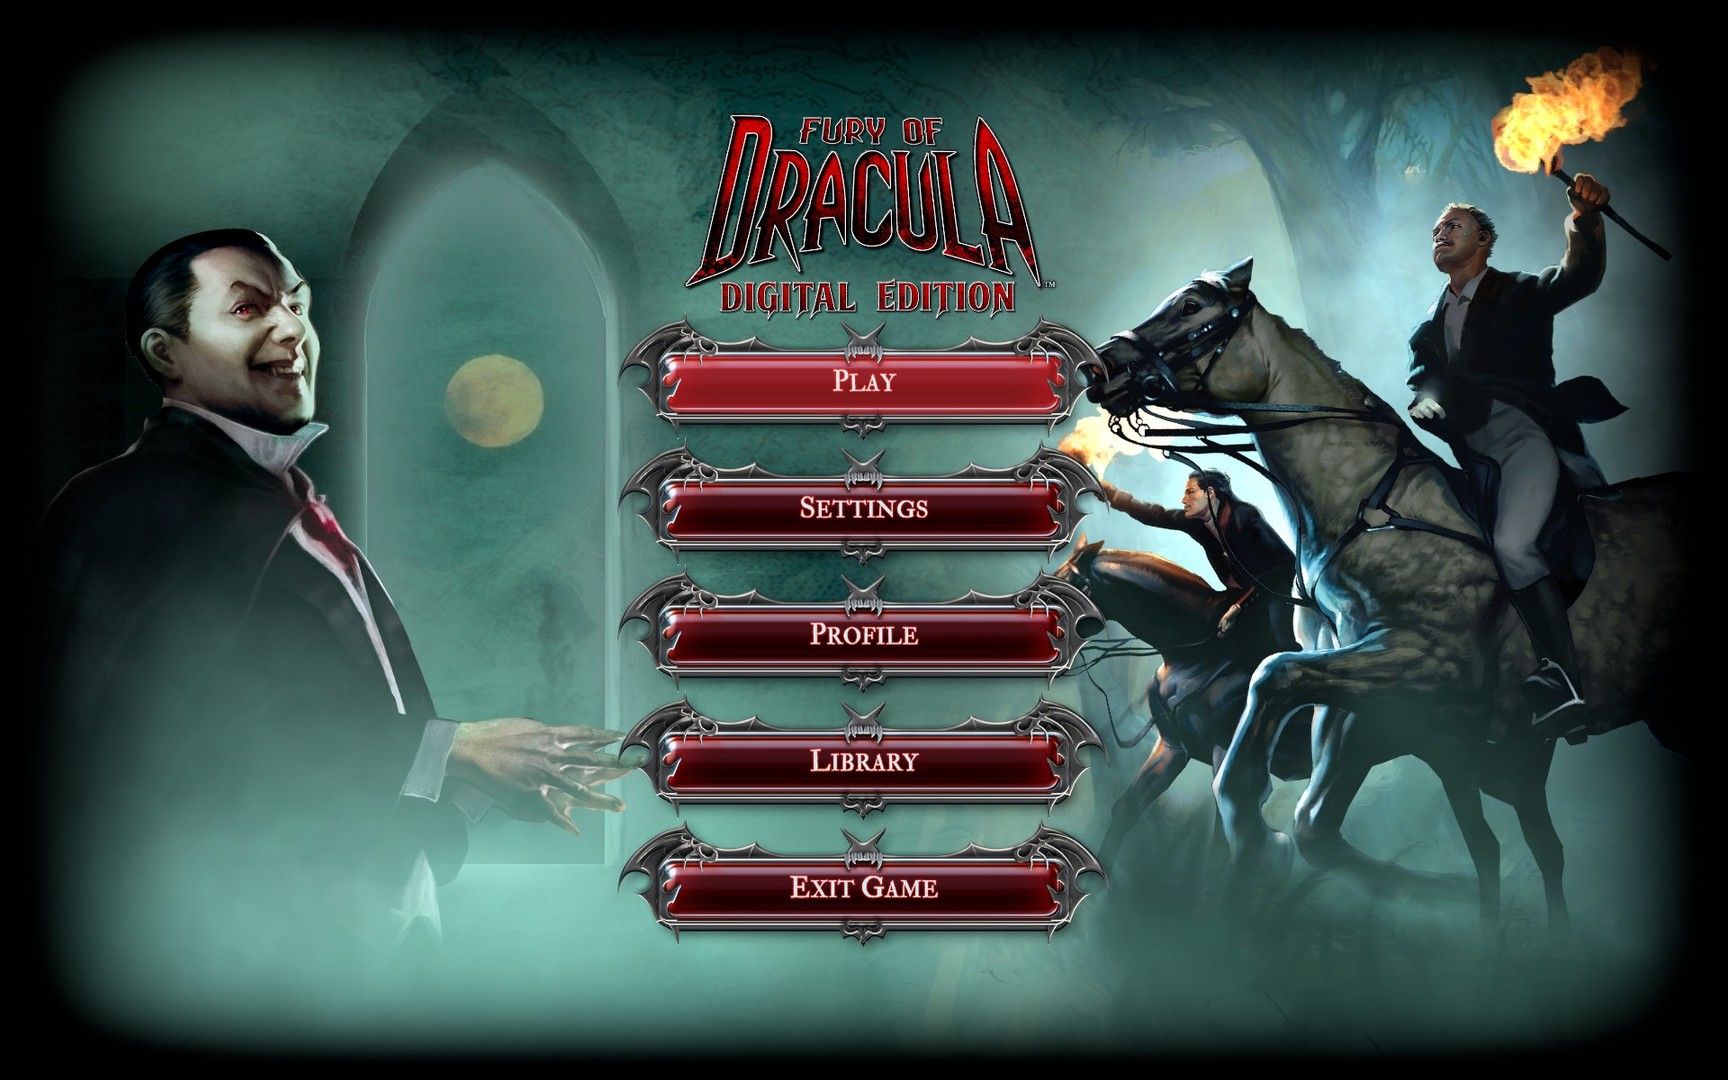 Fury of Dracula: Digital Edition Soundtrack Featured Screenshot #1